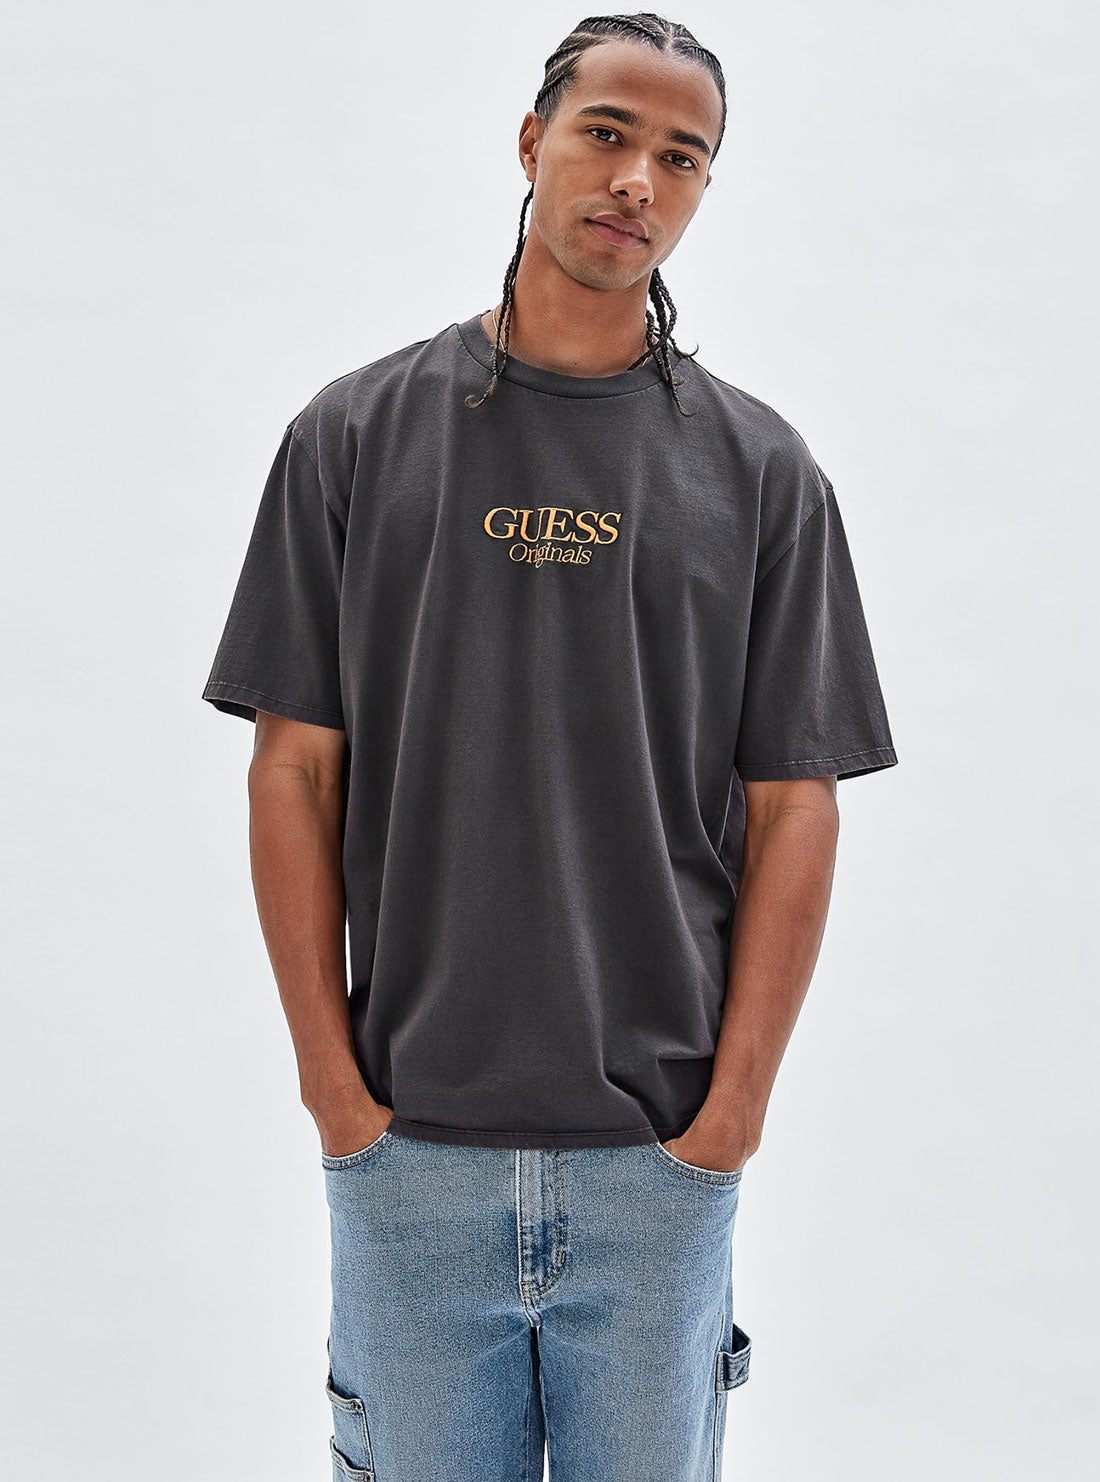 GUESS Men's Guess Originals Black Brent Logo T-Shirt M2BI24K9XF3 Front View